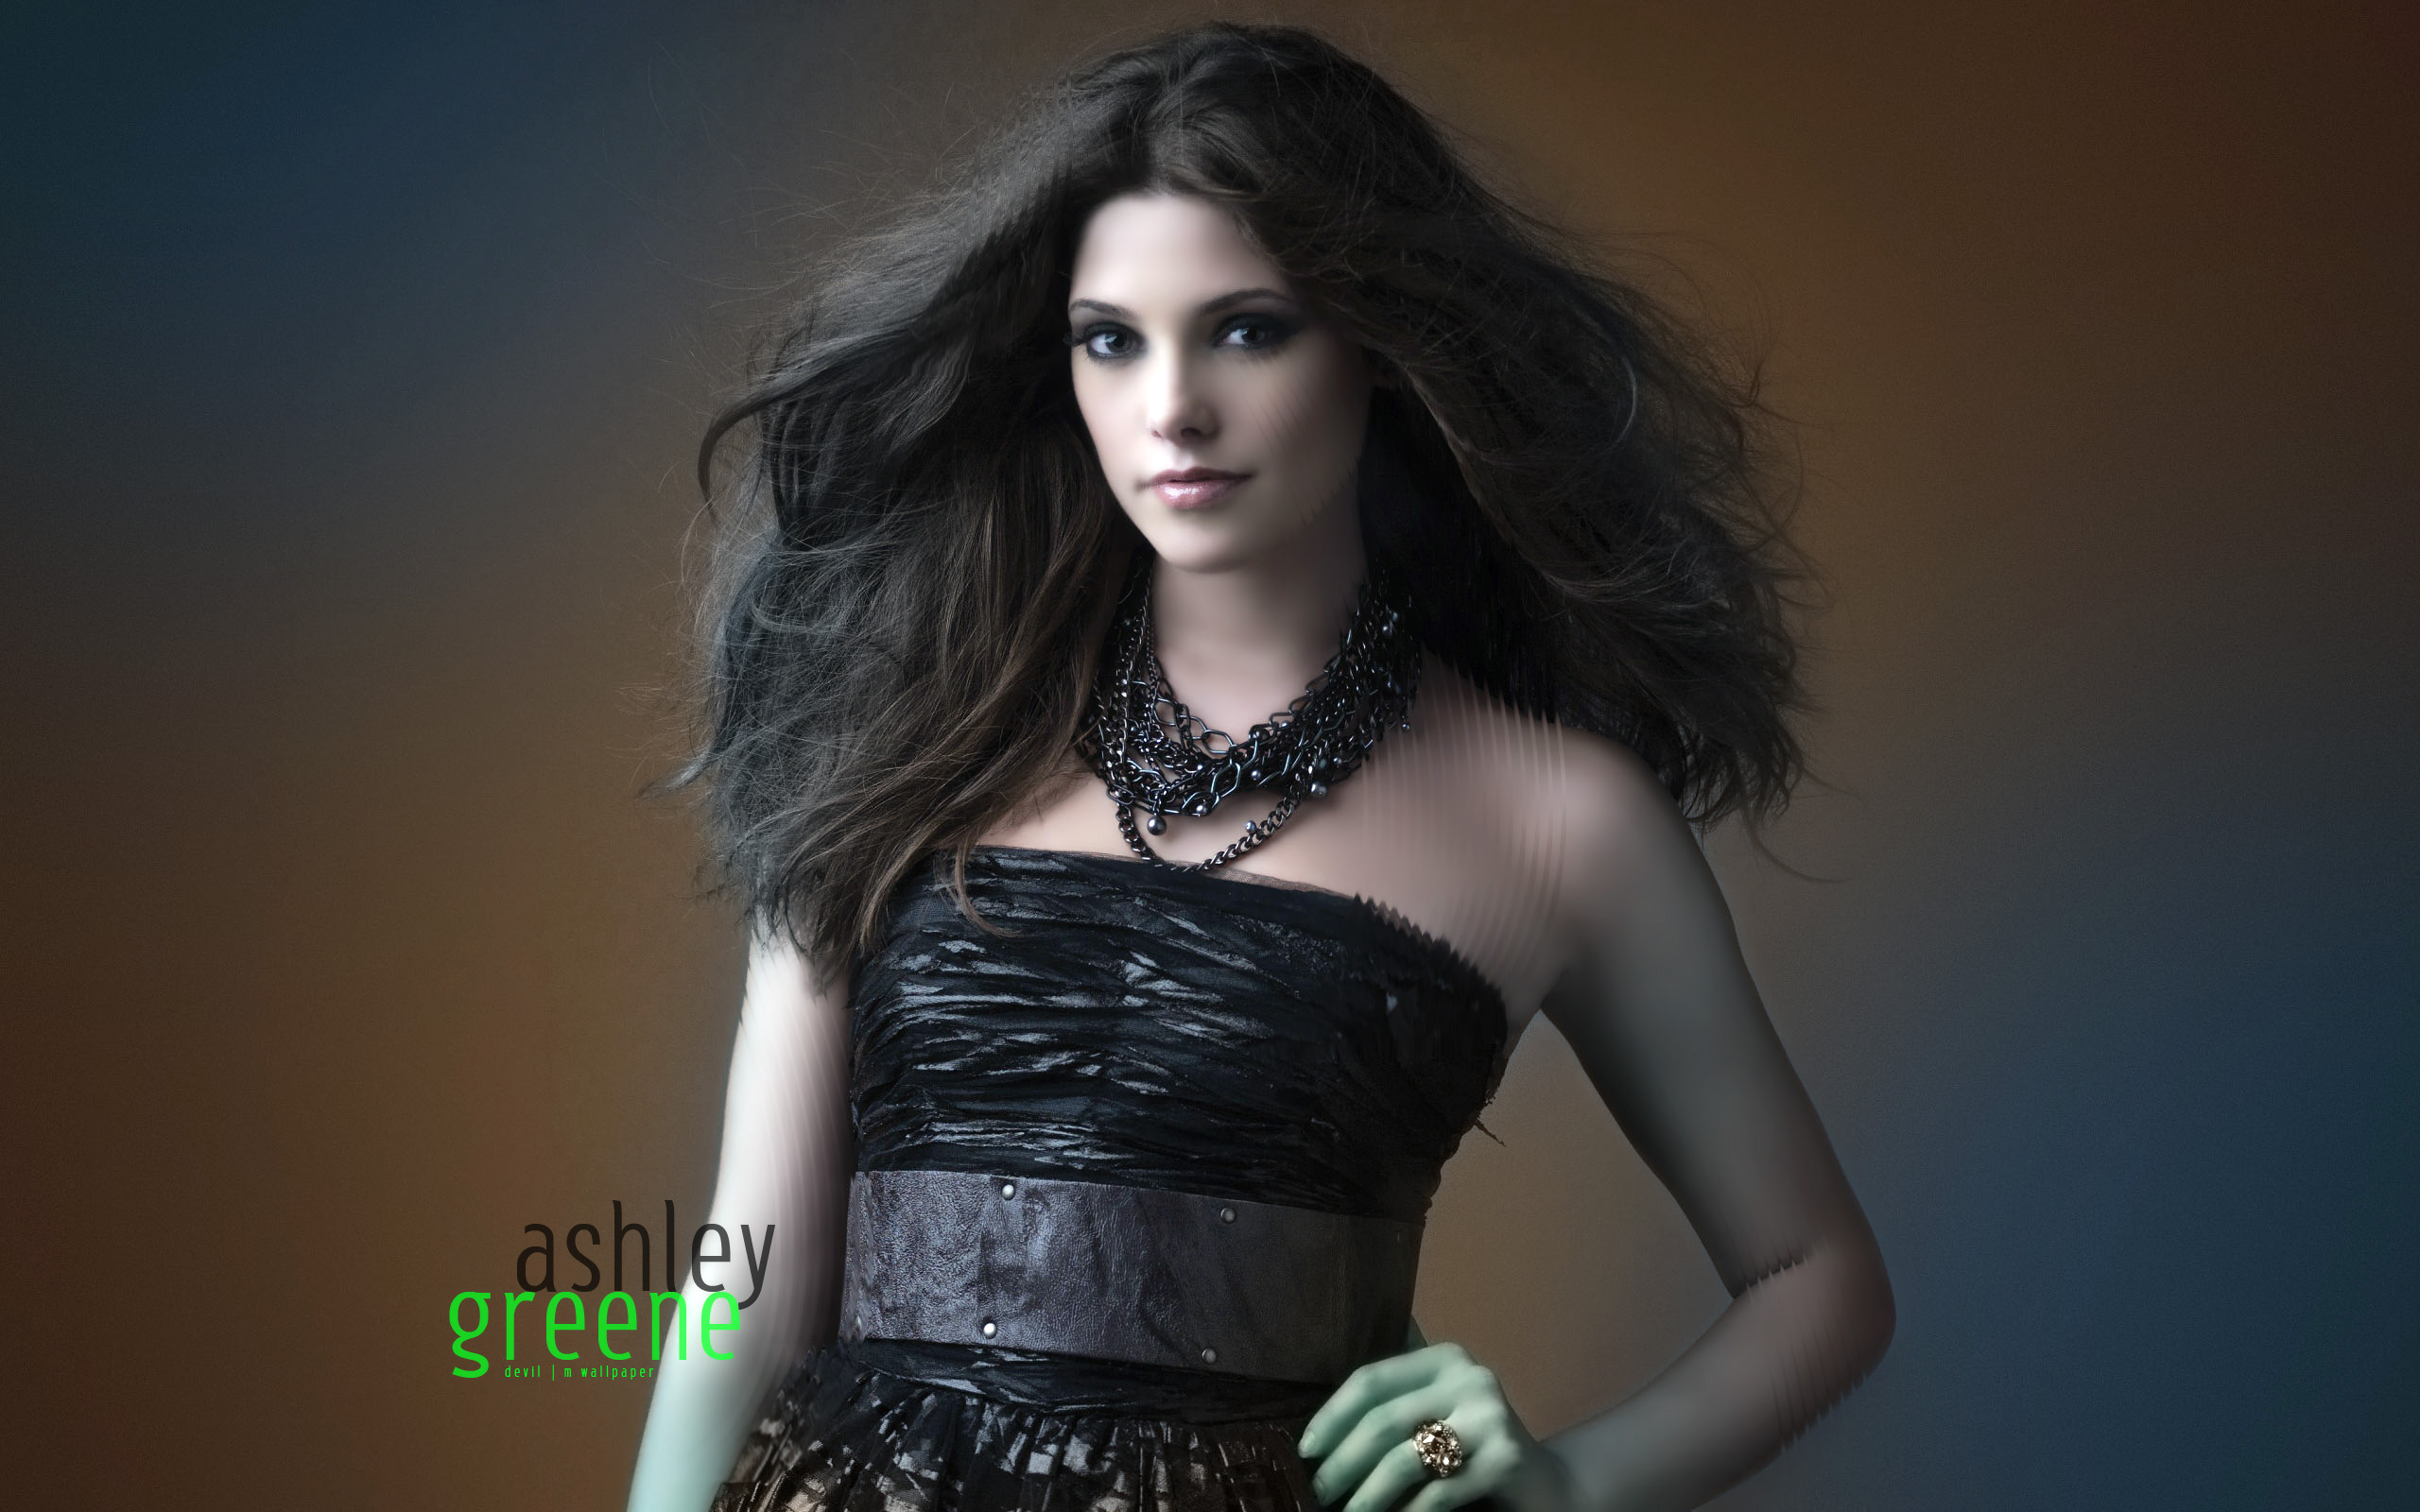 Ashley Greene - Stunning celebrity posing for a captivating desktop wallpaper.